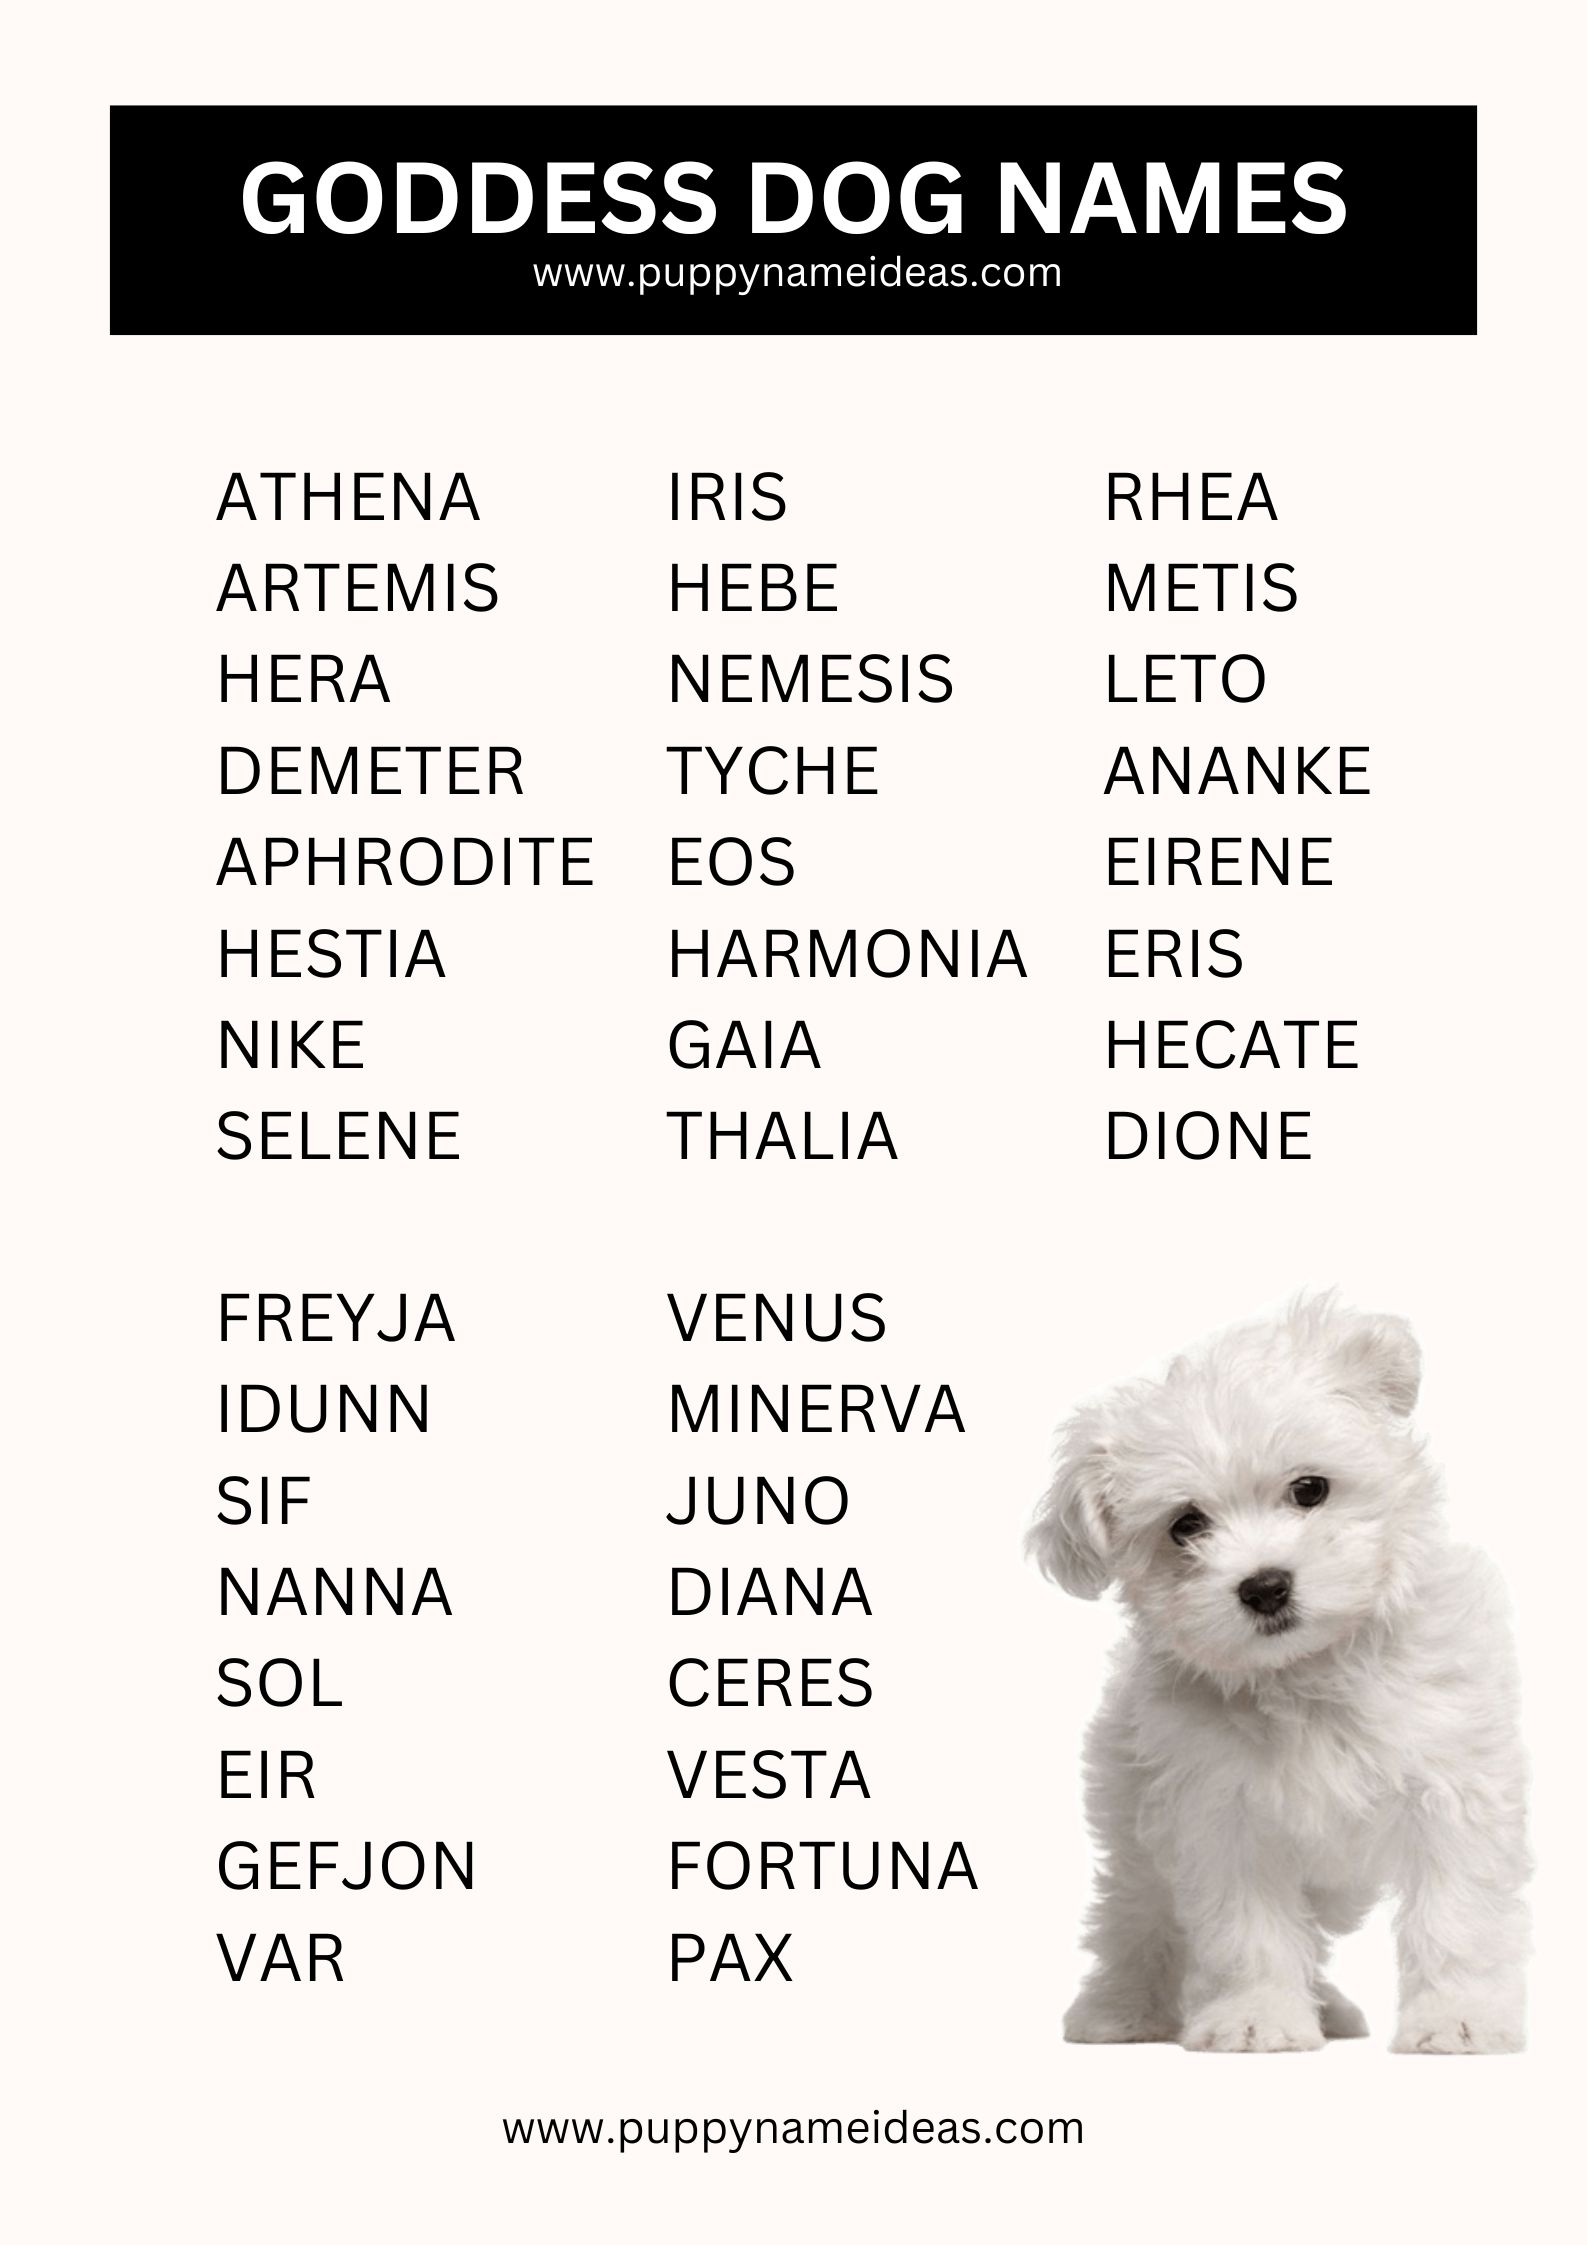 list of goddess dog names